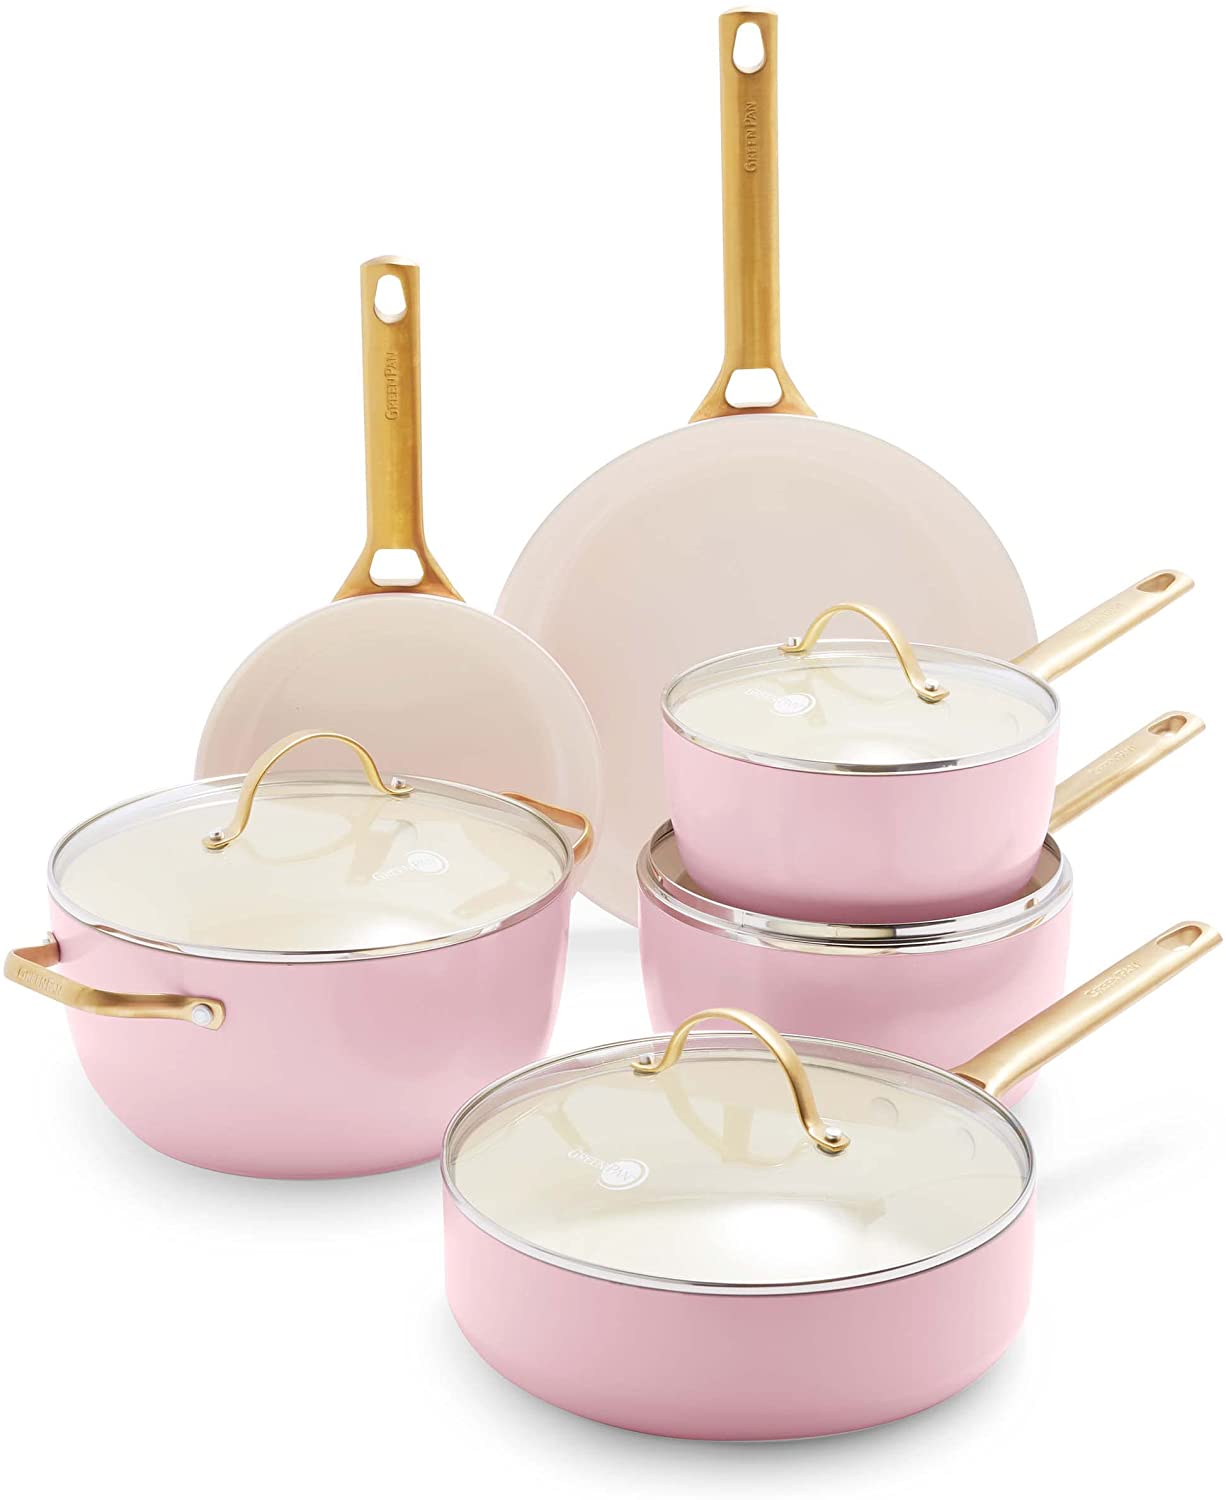 GreenPan Reserve Healthy Ceramic Nonstick Cookware Pots and Pans Set